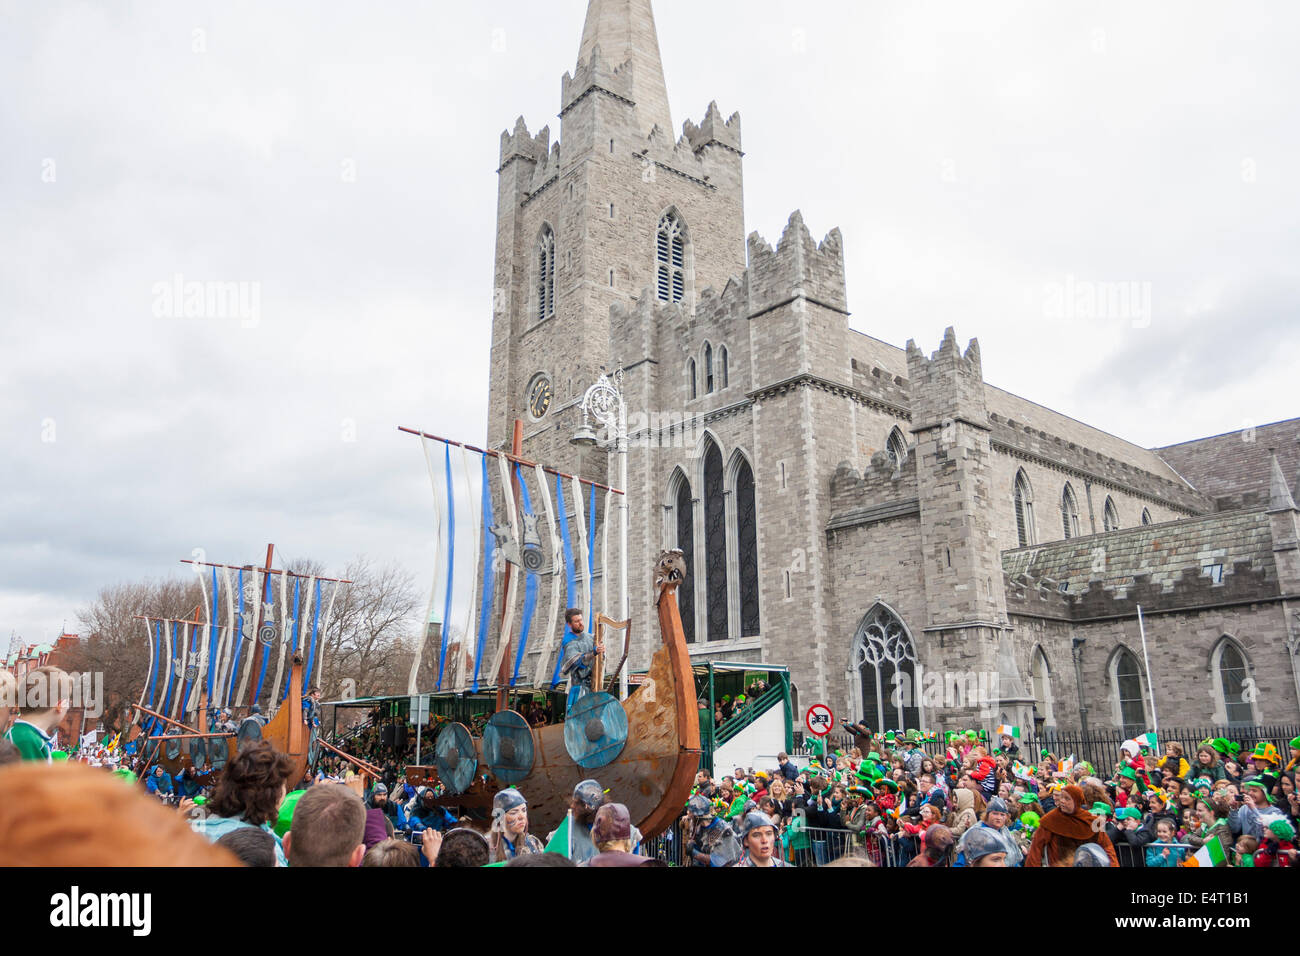 Dublin, Ireland - March 17: Saint Patrick's Day parade in Dublin, Ireland. On March 17, 2014. People dress up Saint Patrick's Stock Photo